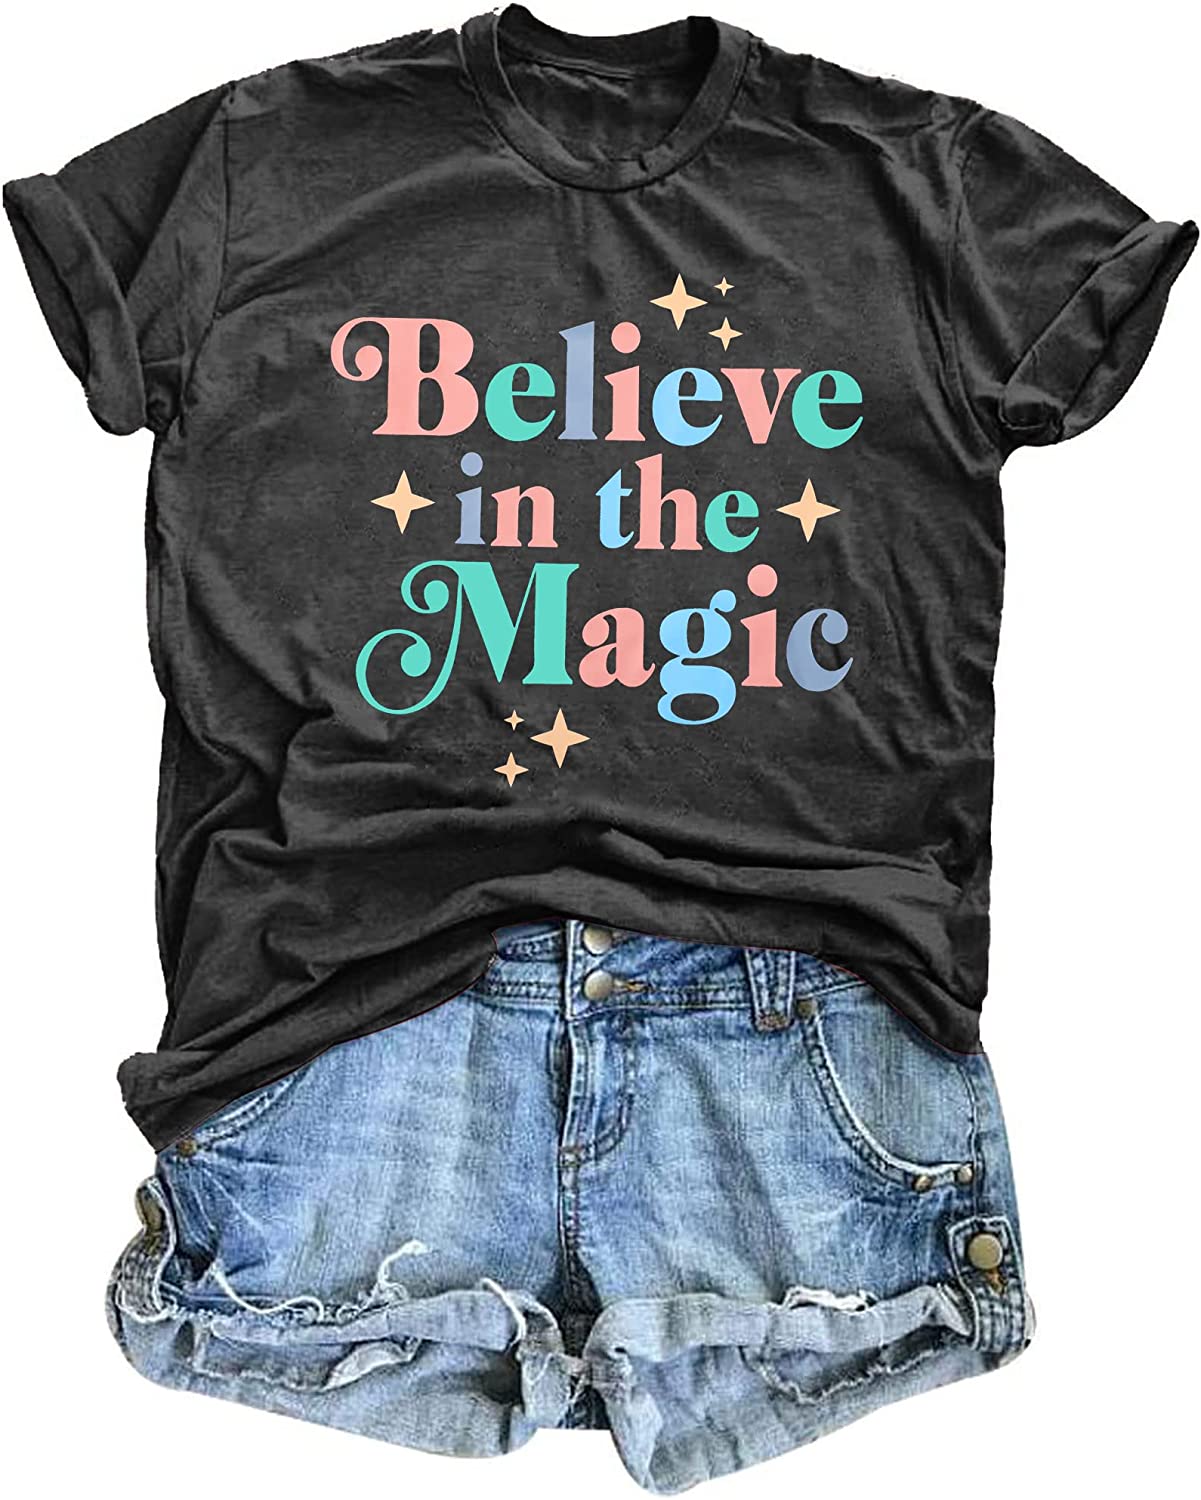 Believe in Magic Shirt Women Cute Fairy Graphic Tshirt Girl Trip Tee Funny Vacation Shirt Causal Short Sleeve Top